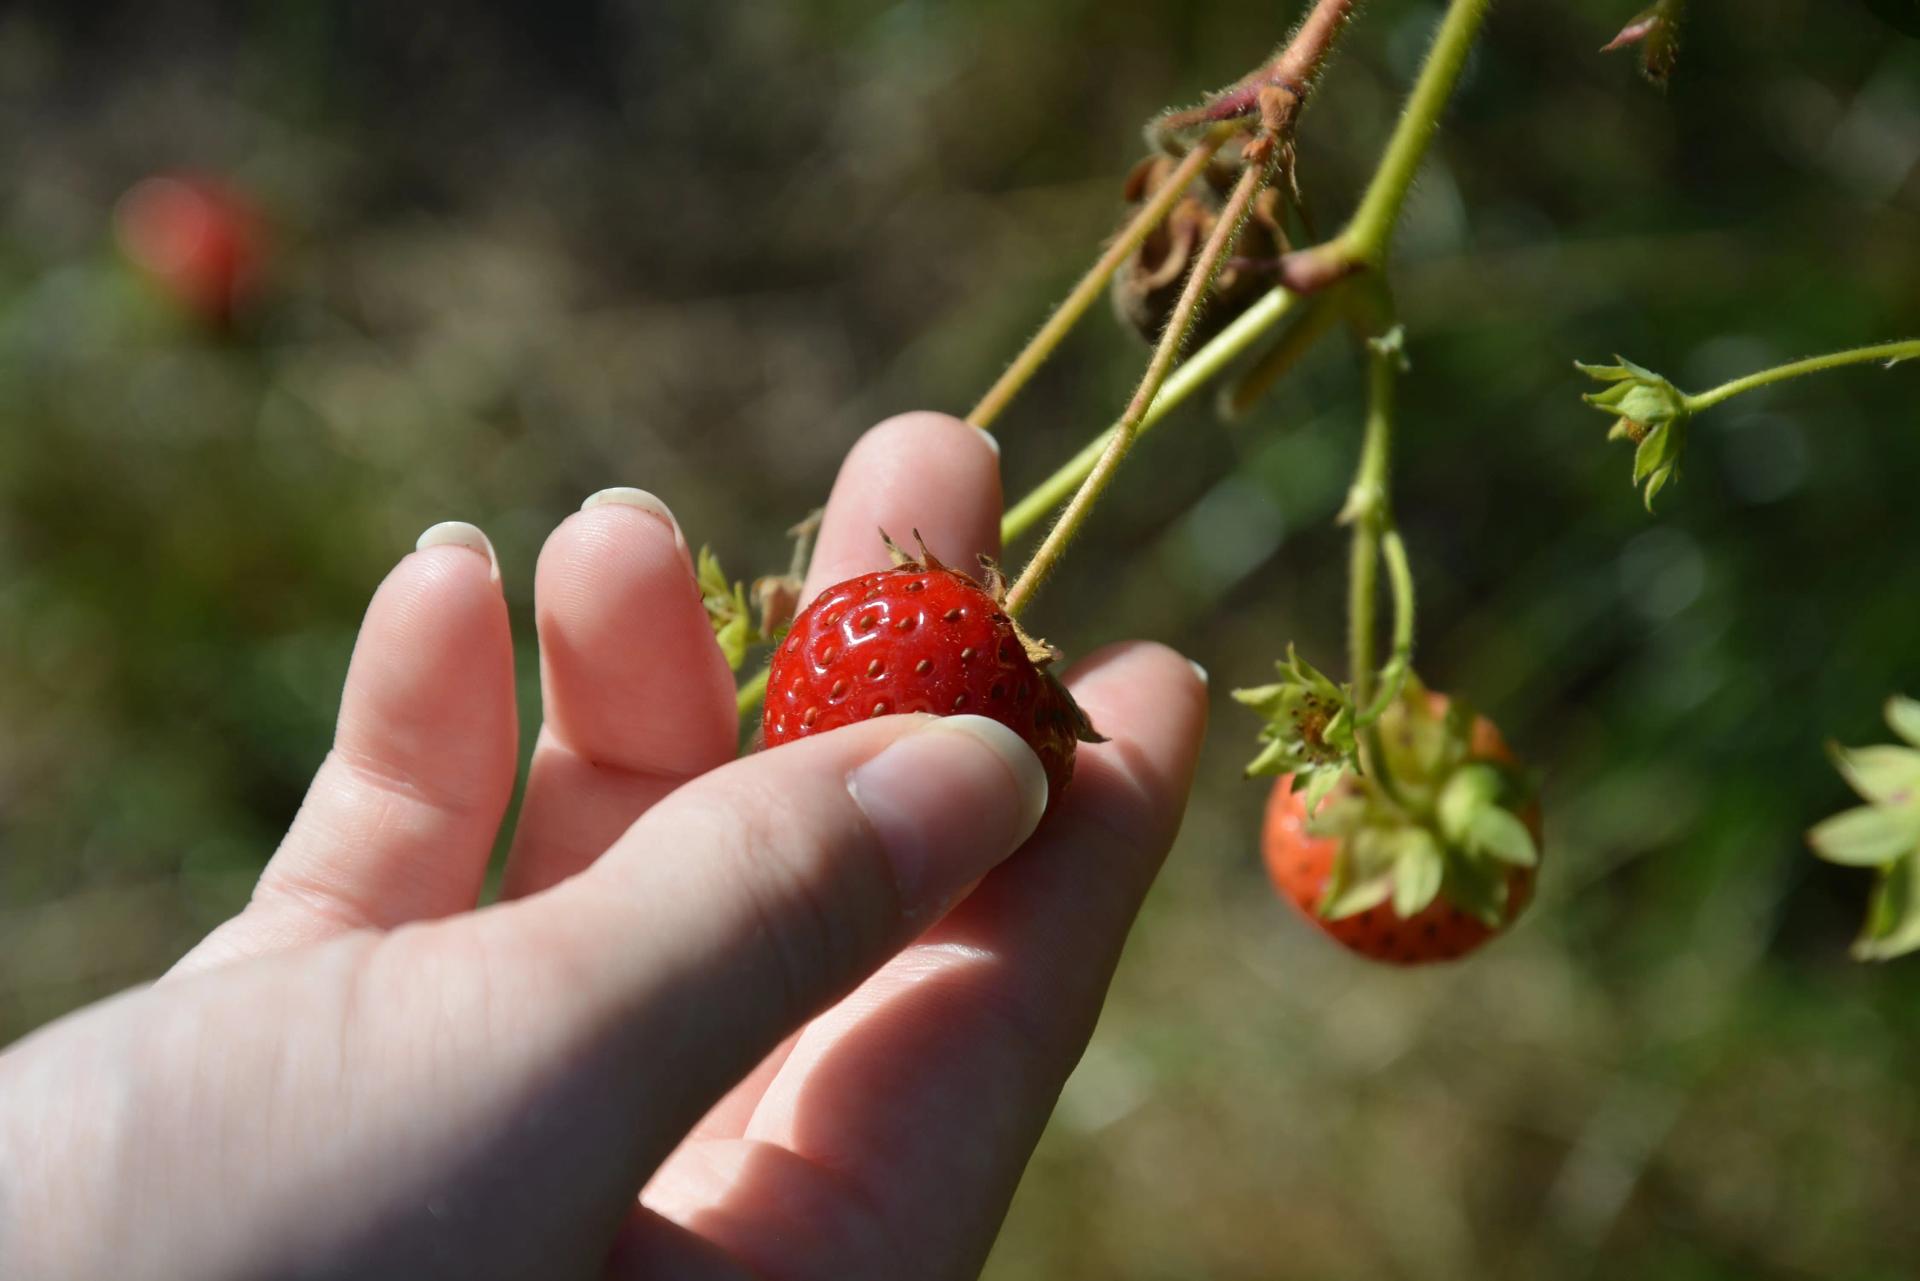 picking-strwberries-2022-10-07-00-45-00-utc-min.JPG